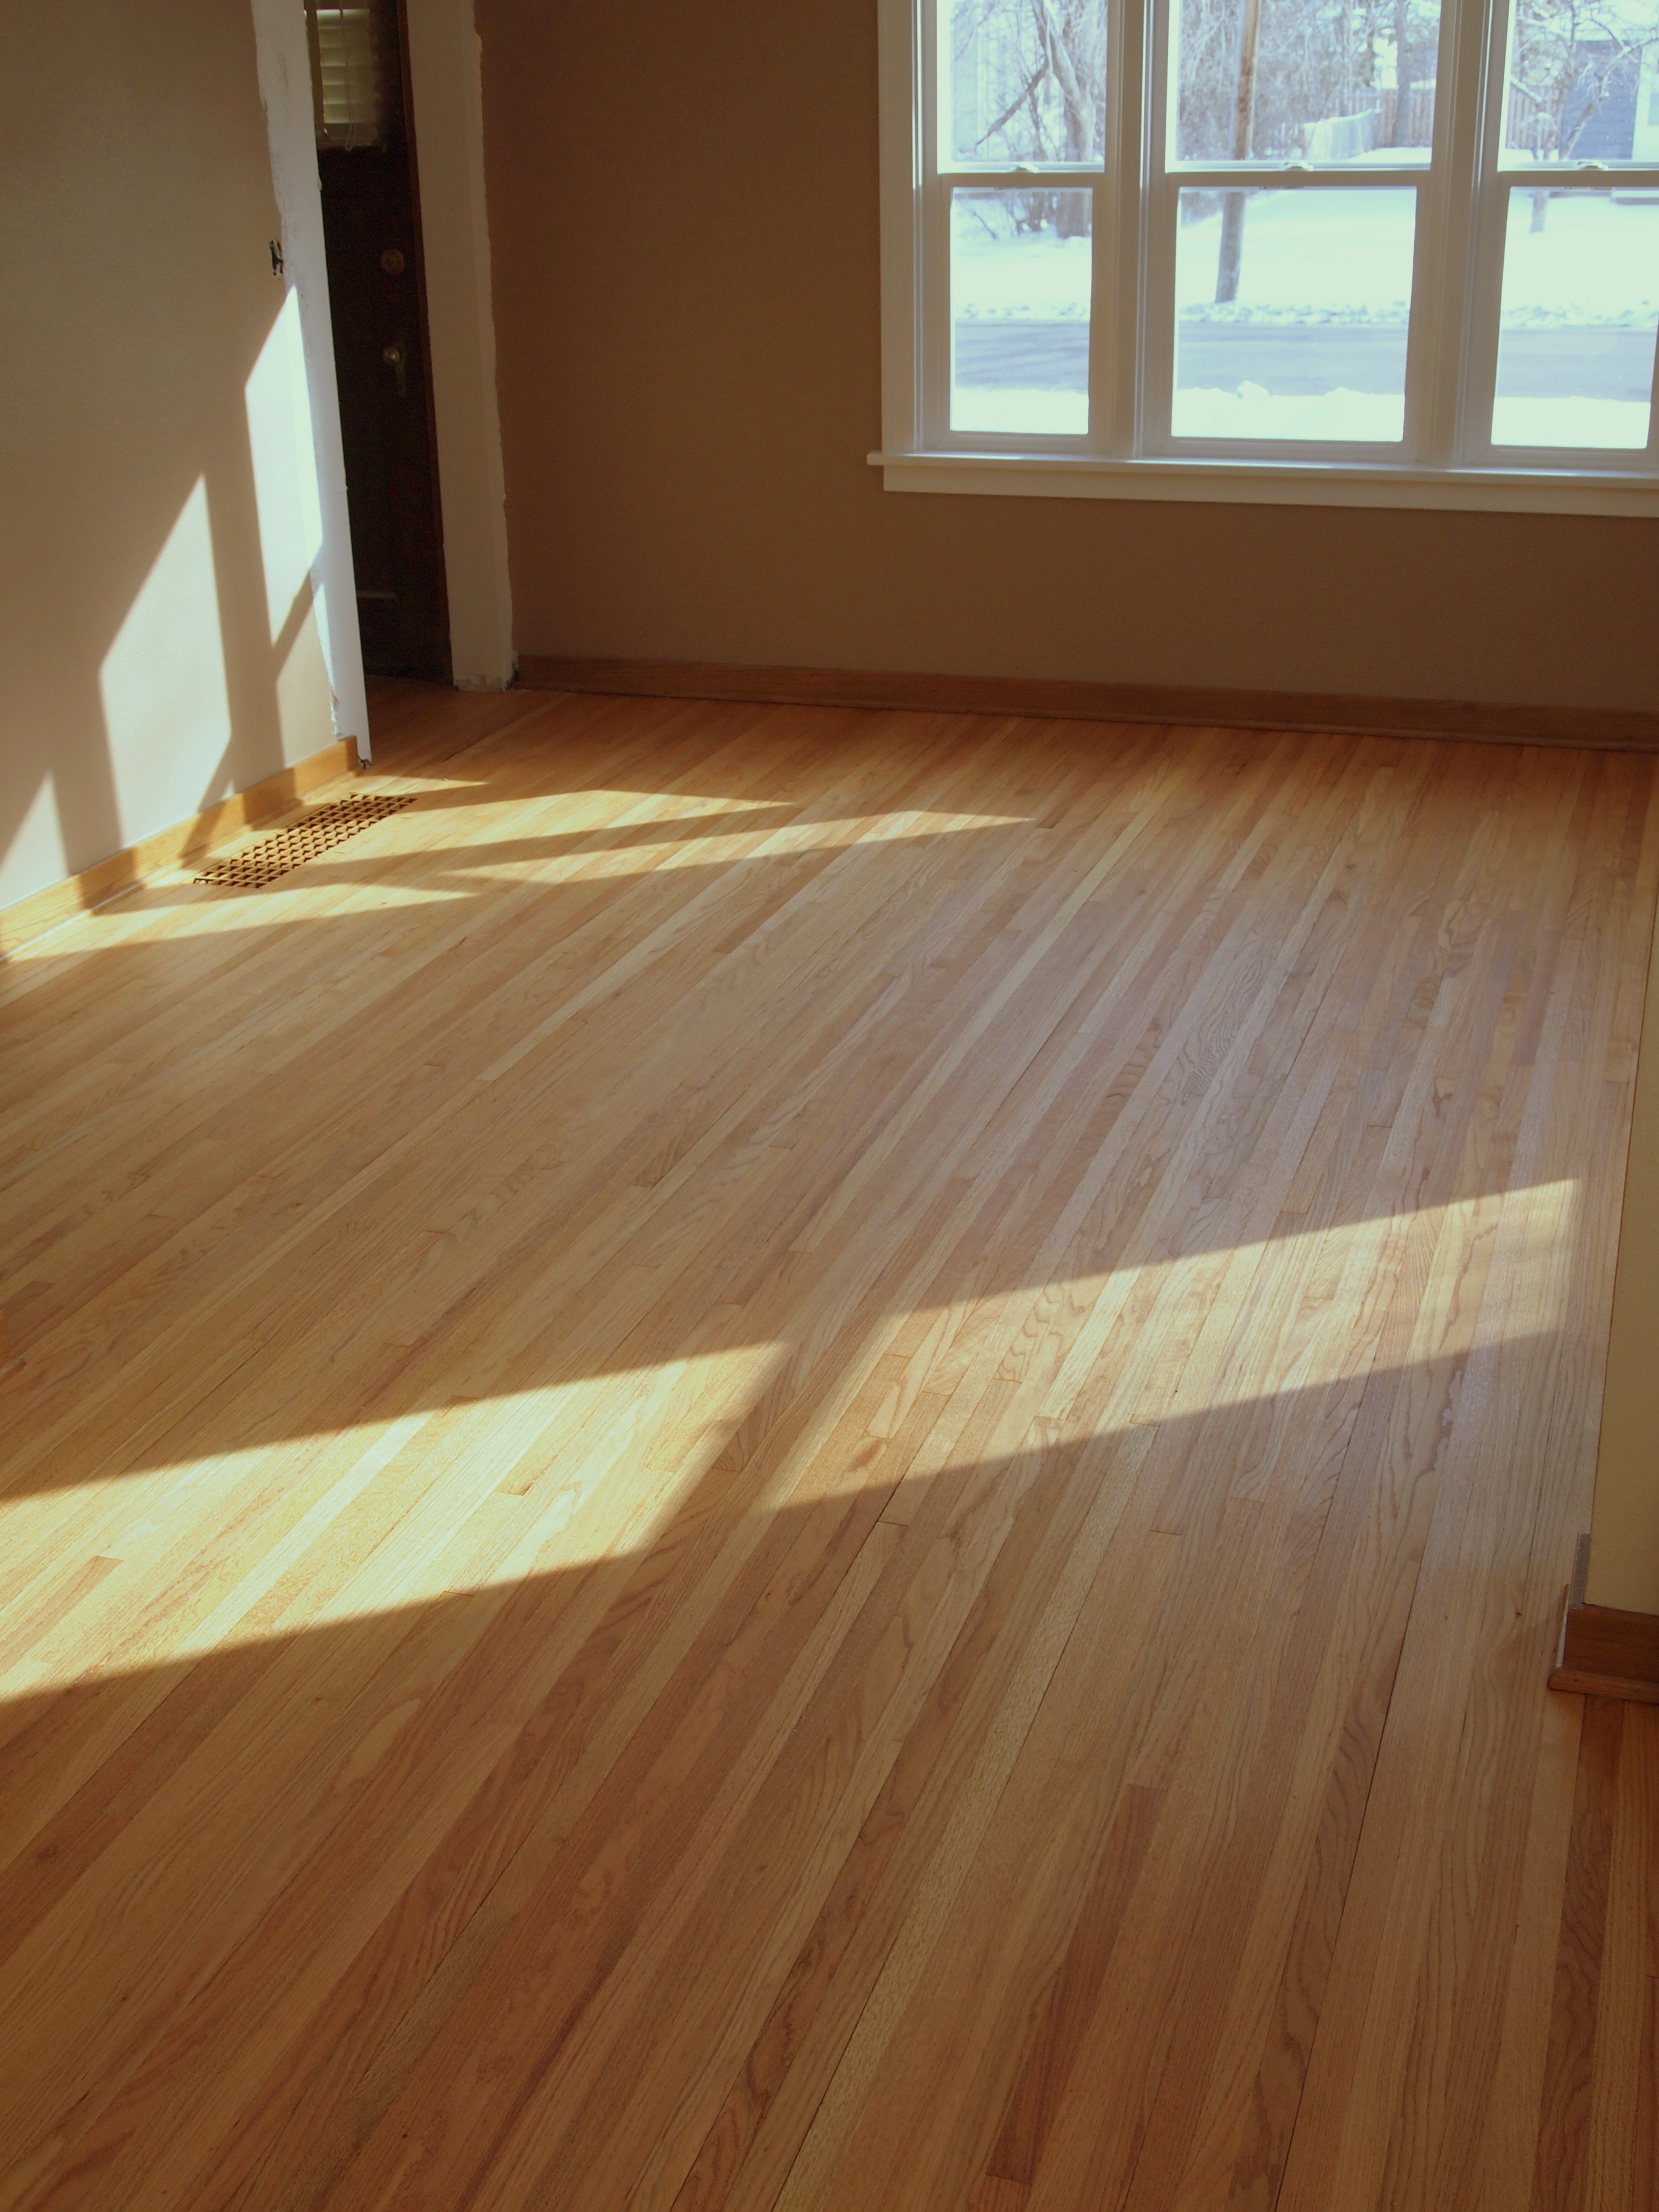 Wood Floor 1 Laminate Parket, 1 Inch Hardwood Flooring